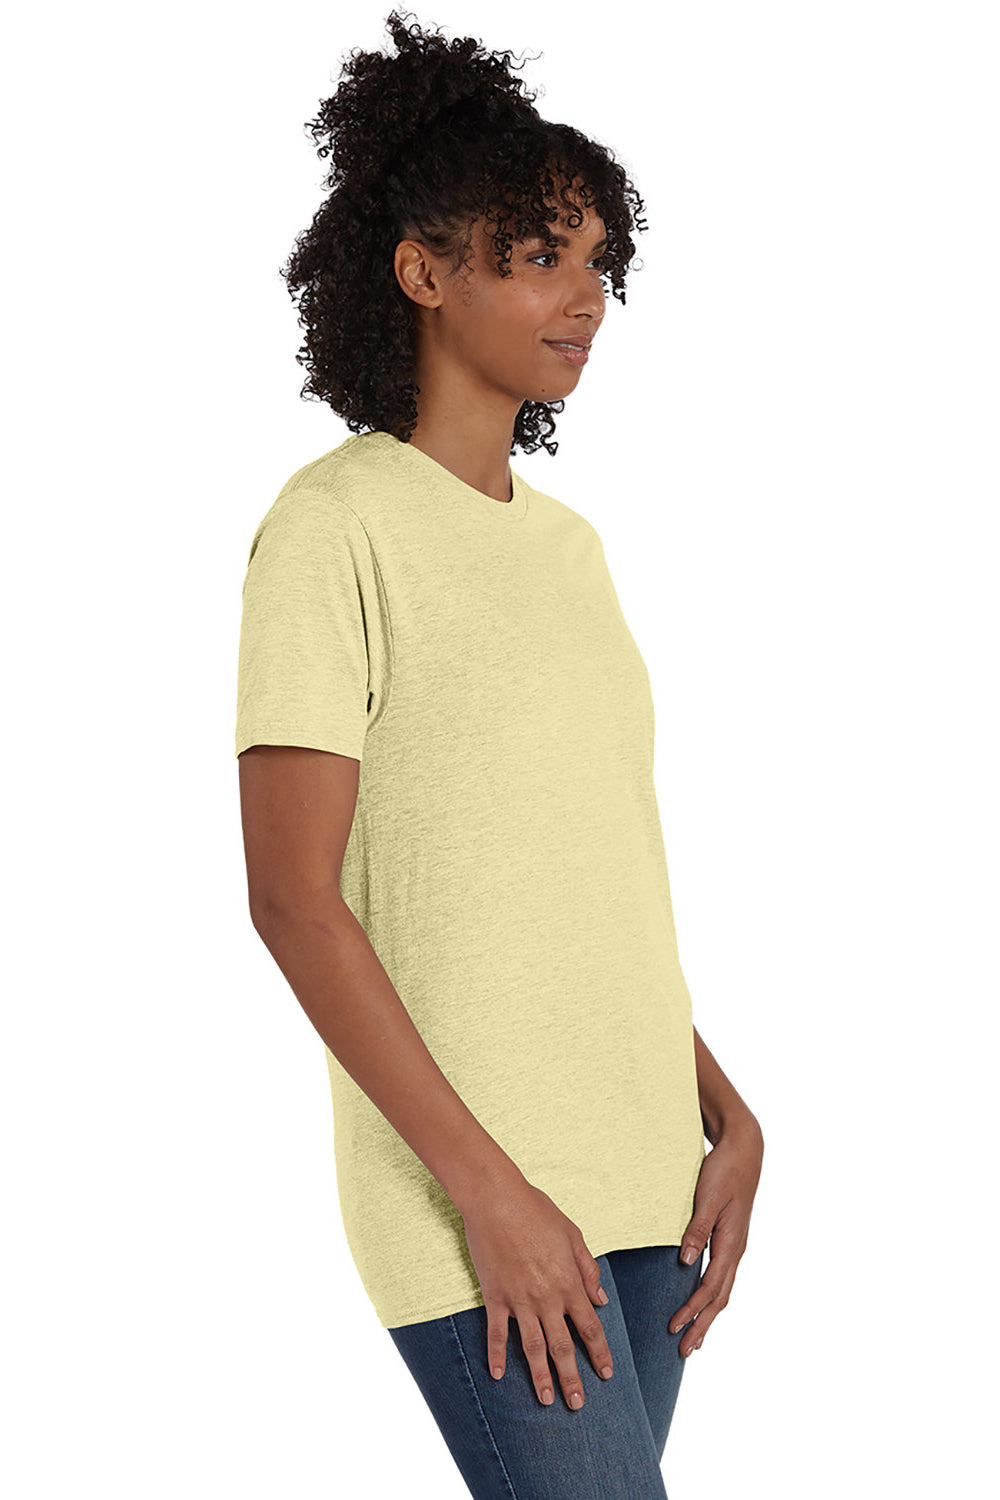 Hanes 4980 Mens Nano-T Short Sleeve Crewneck T-Shirt Heather Lemon Meringue Yellow 3Q